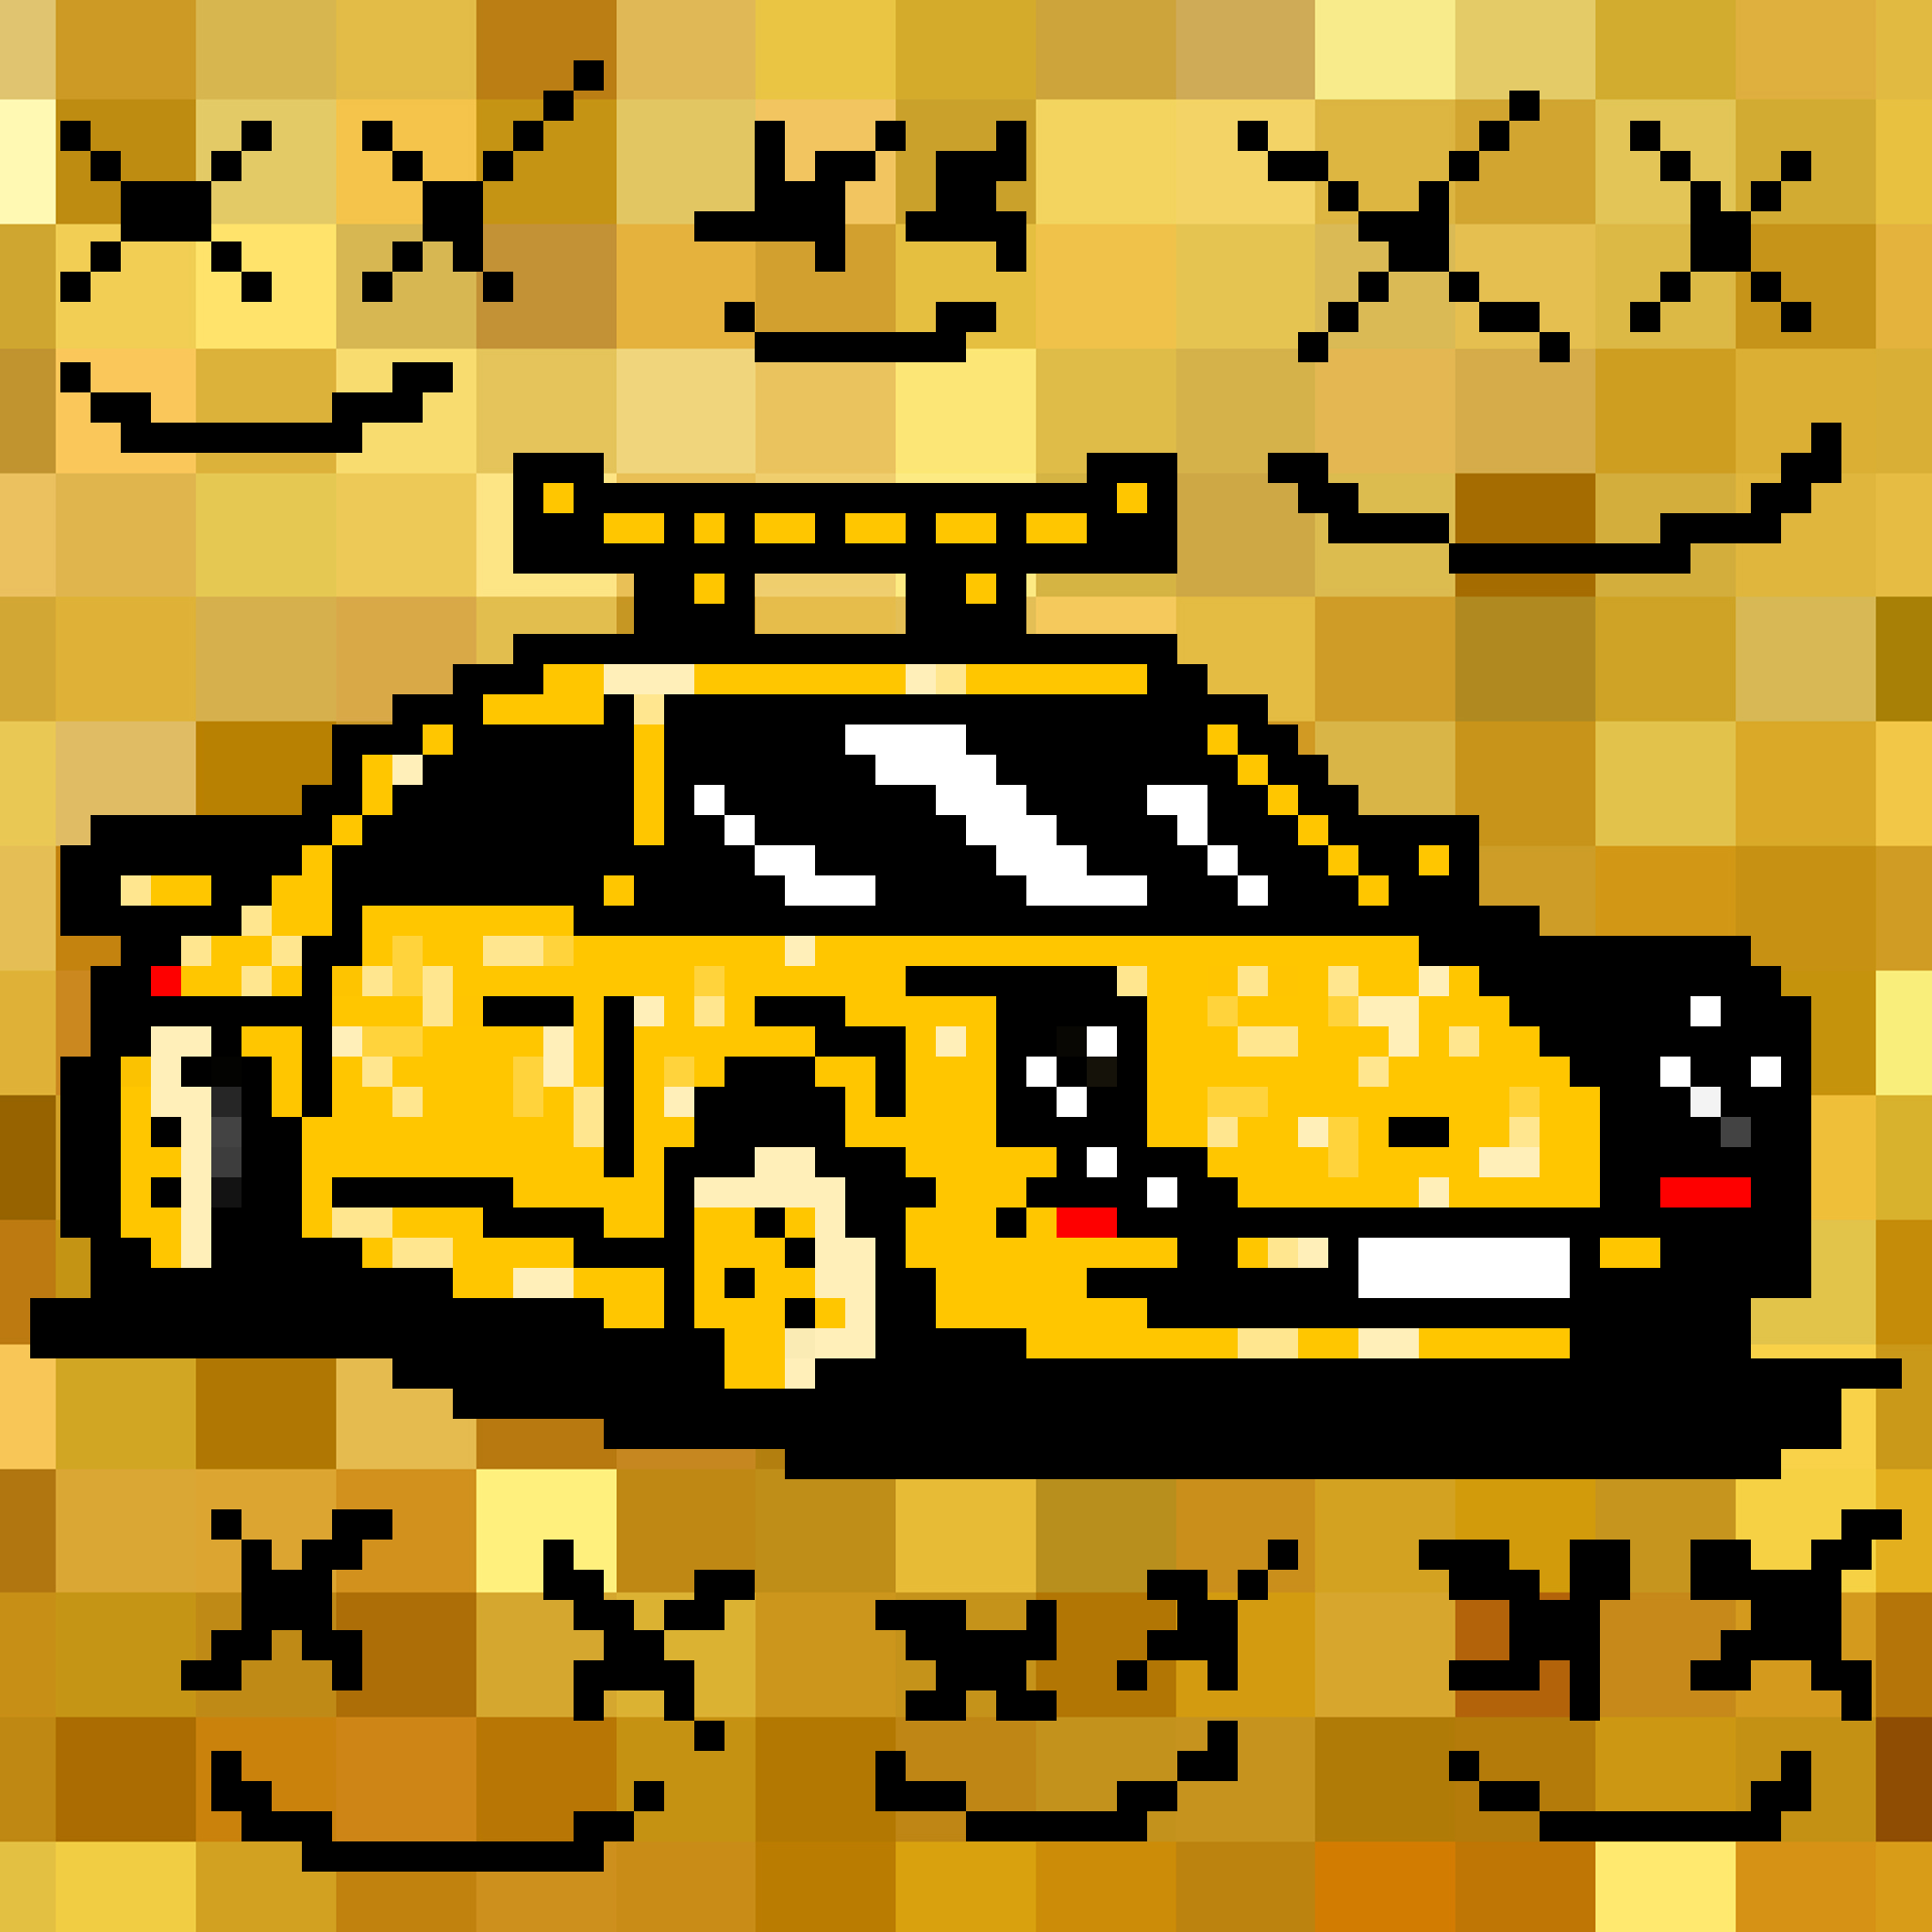 Porsche #15 "- Goldylocks"